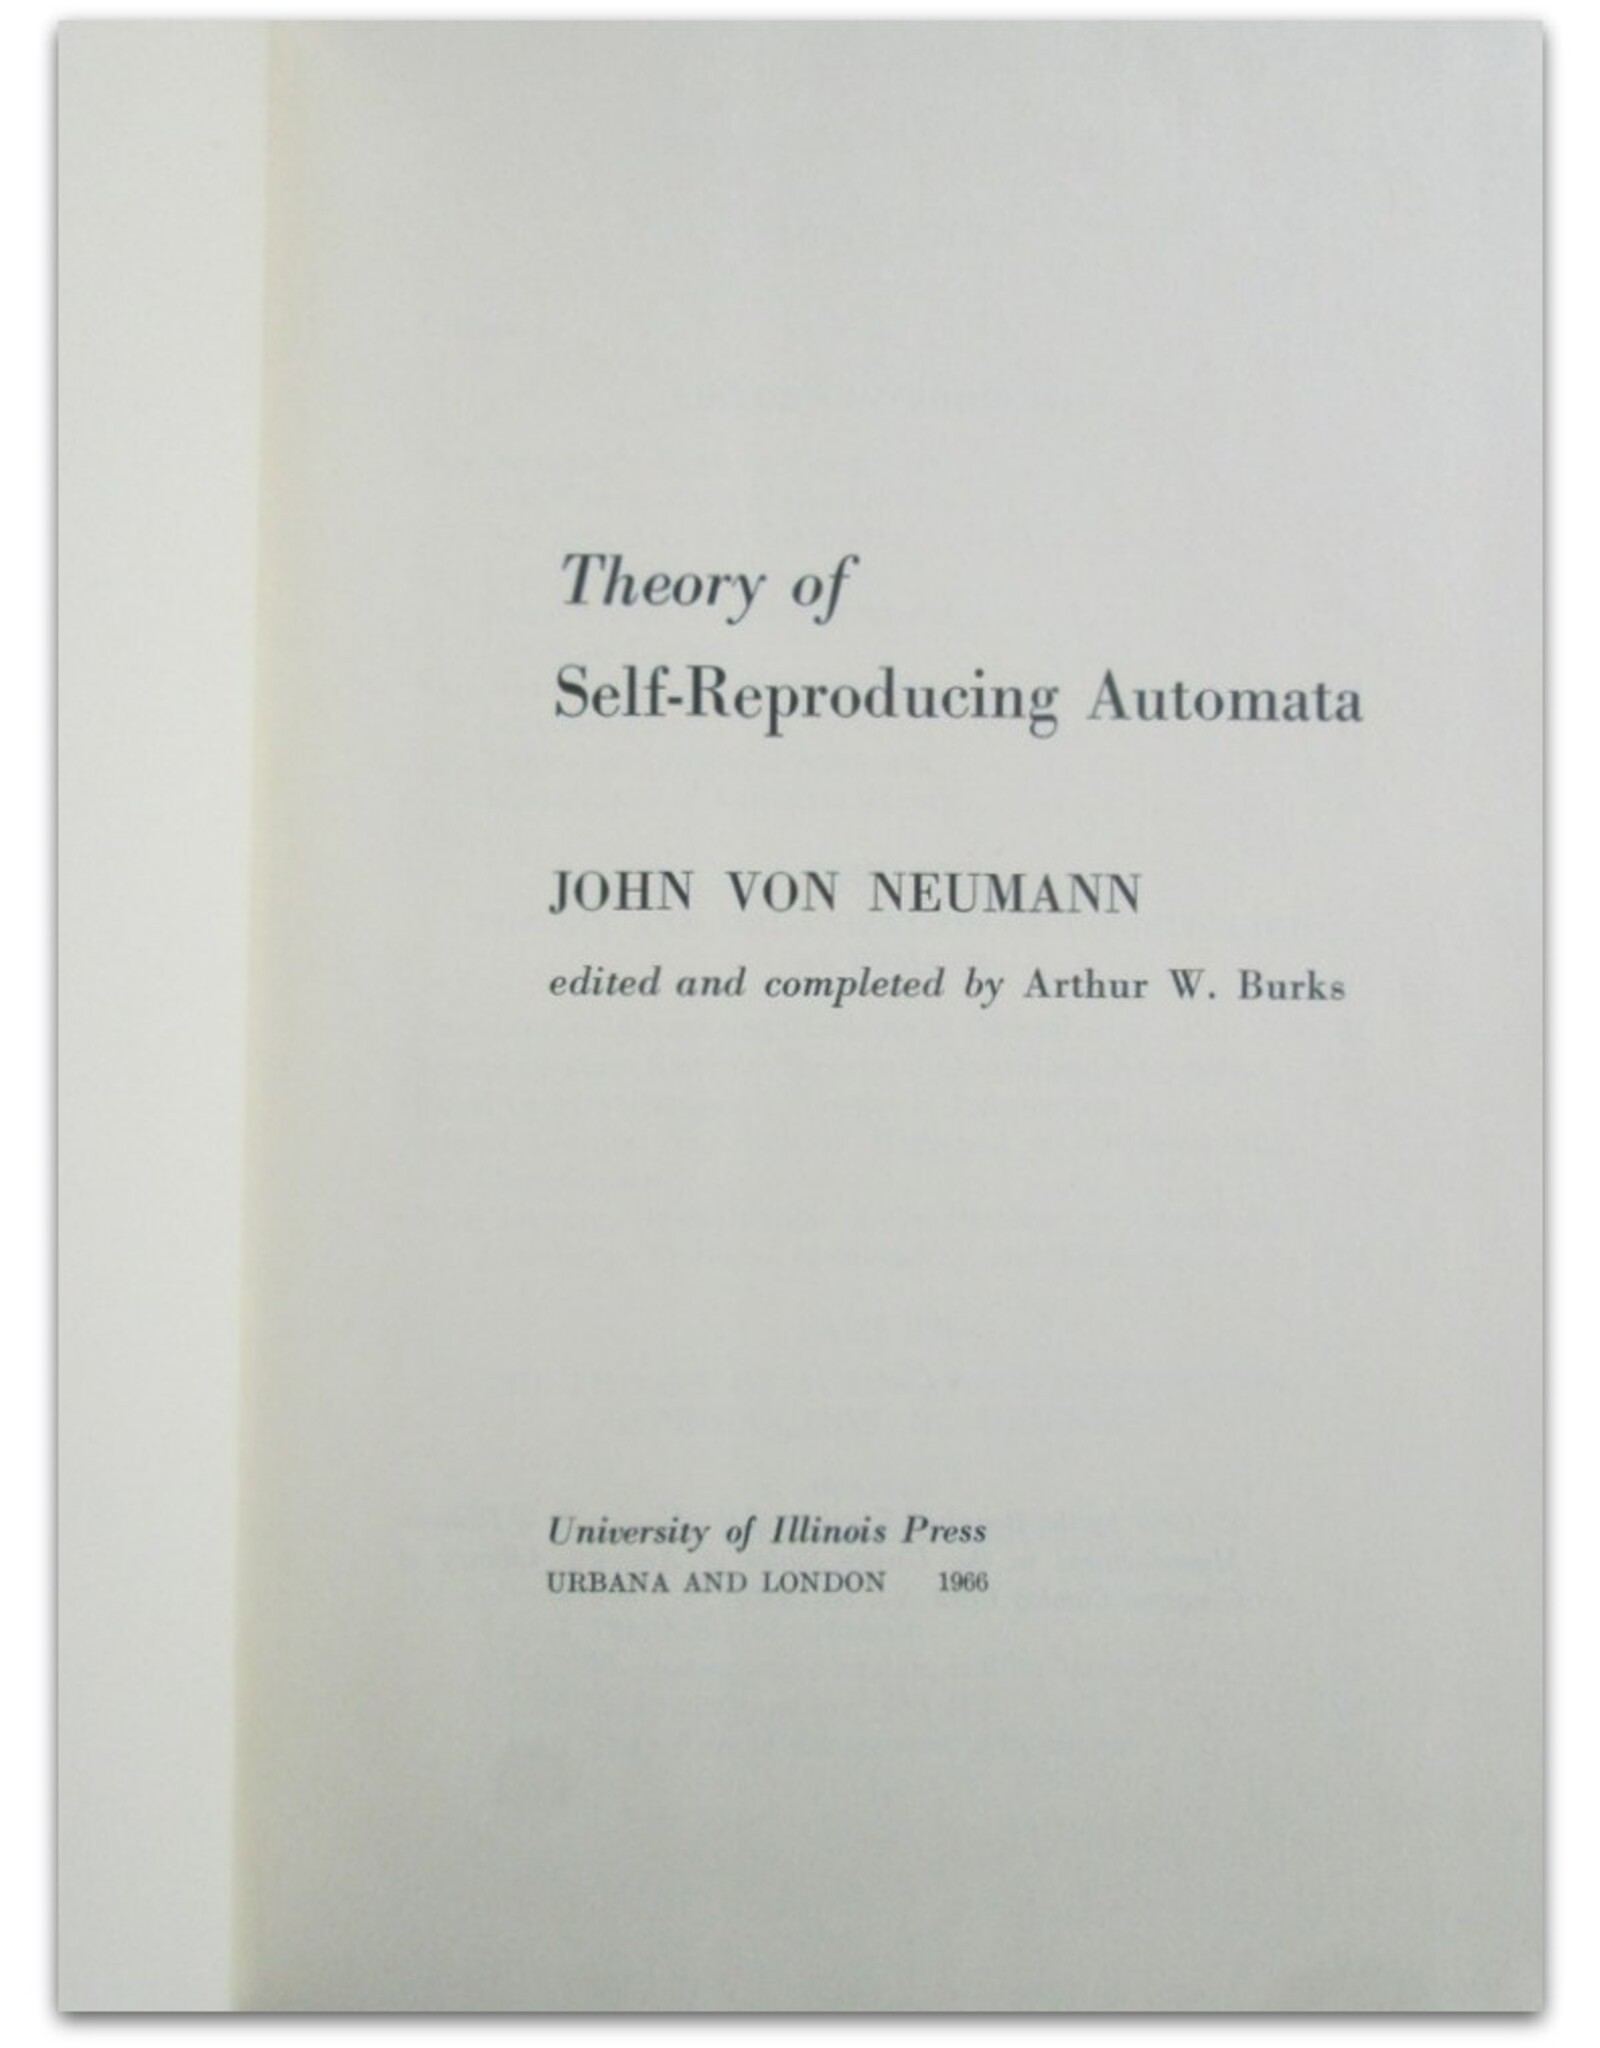 John von Neumann - Theory of Self-Reproducing Automata. Edited [...] by Arthur W. Burks